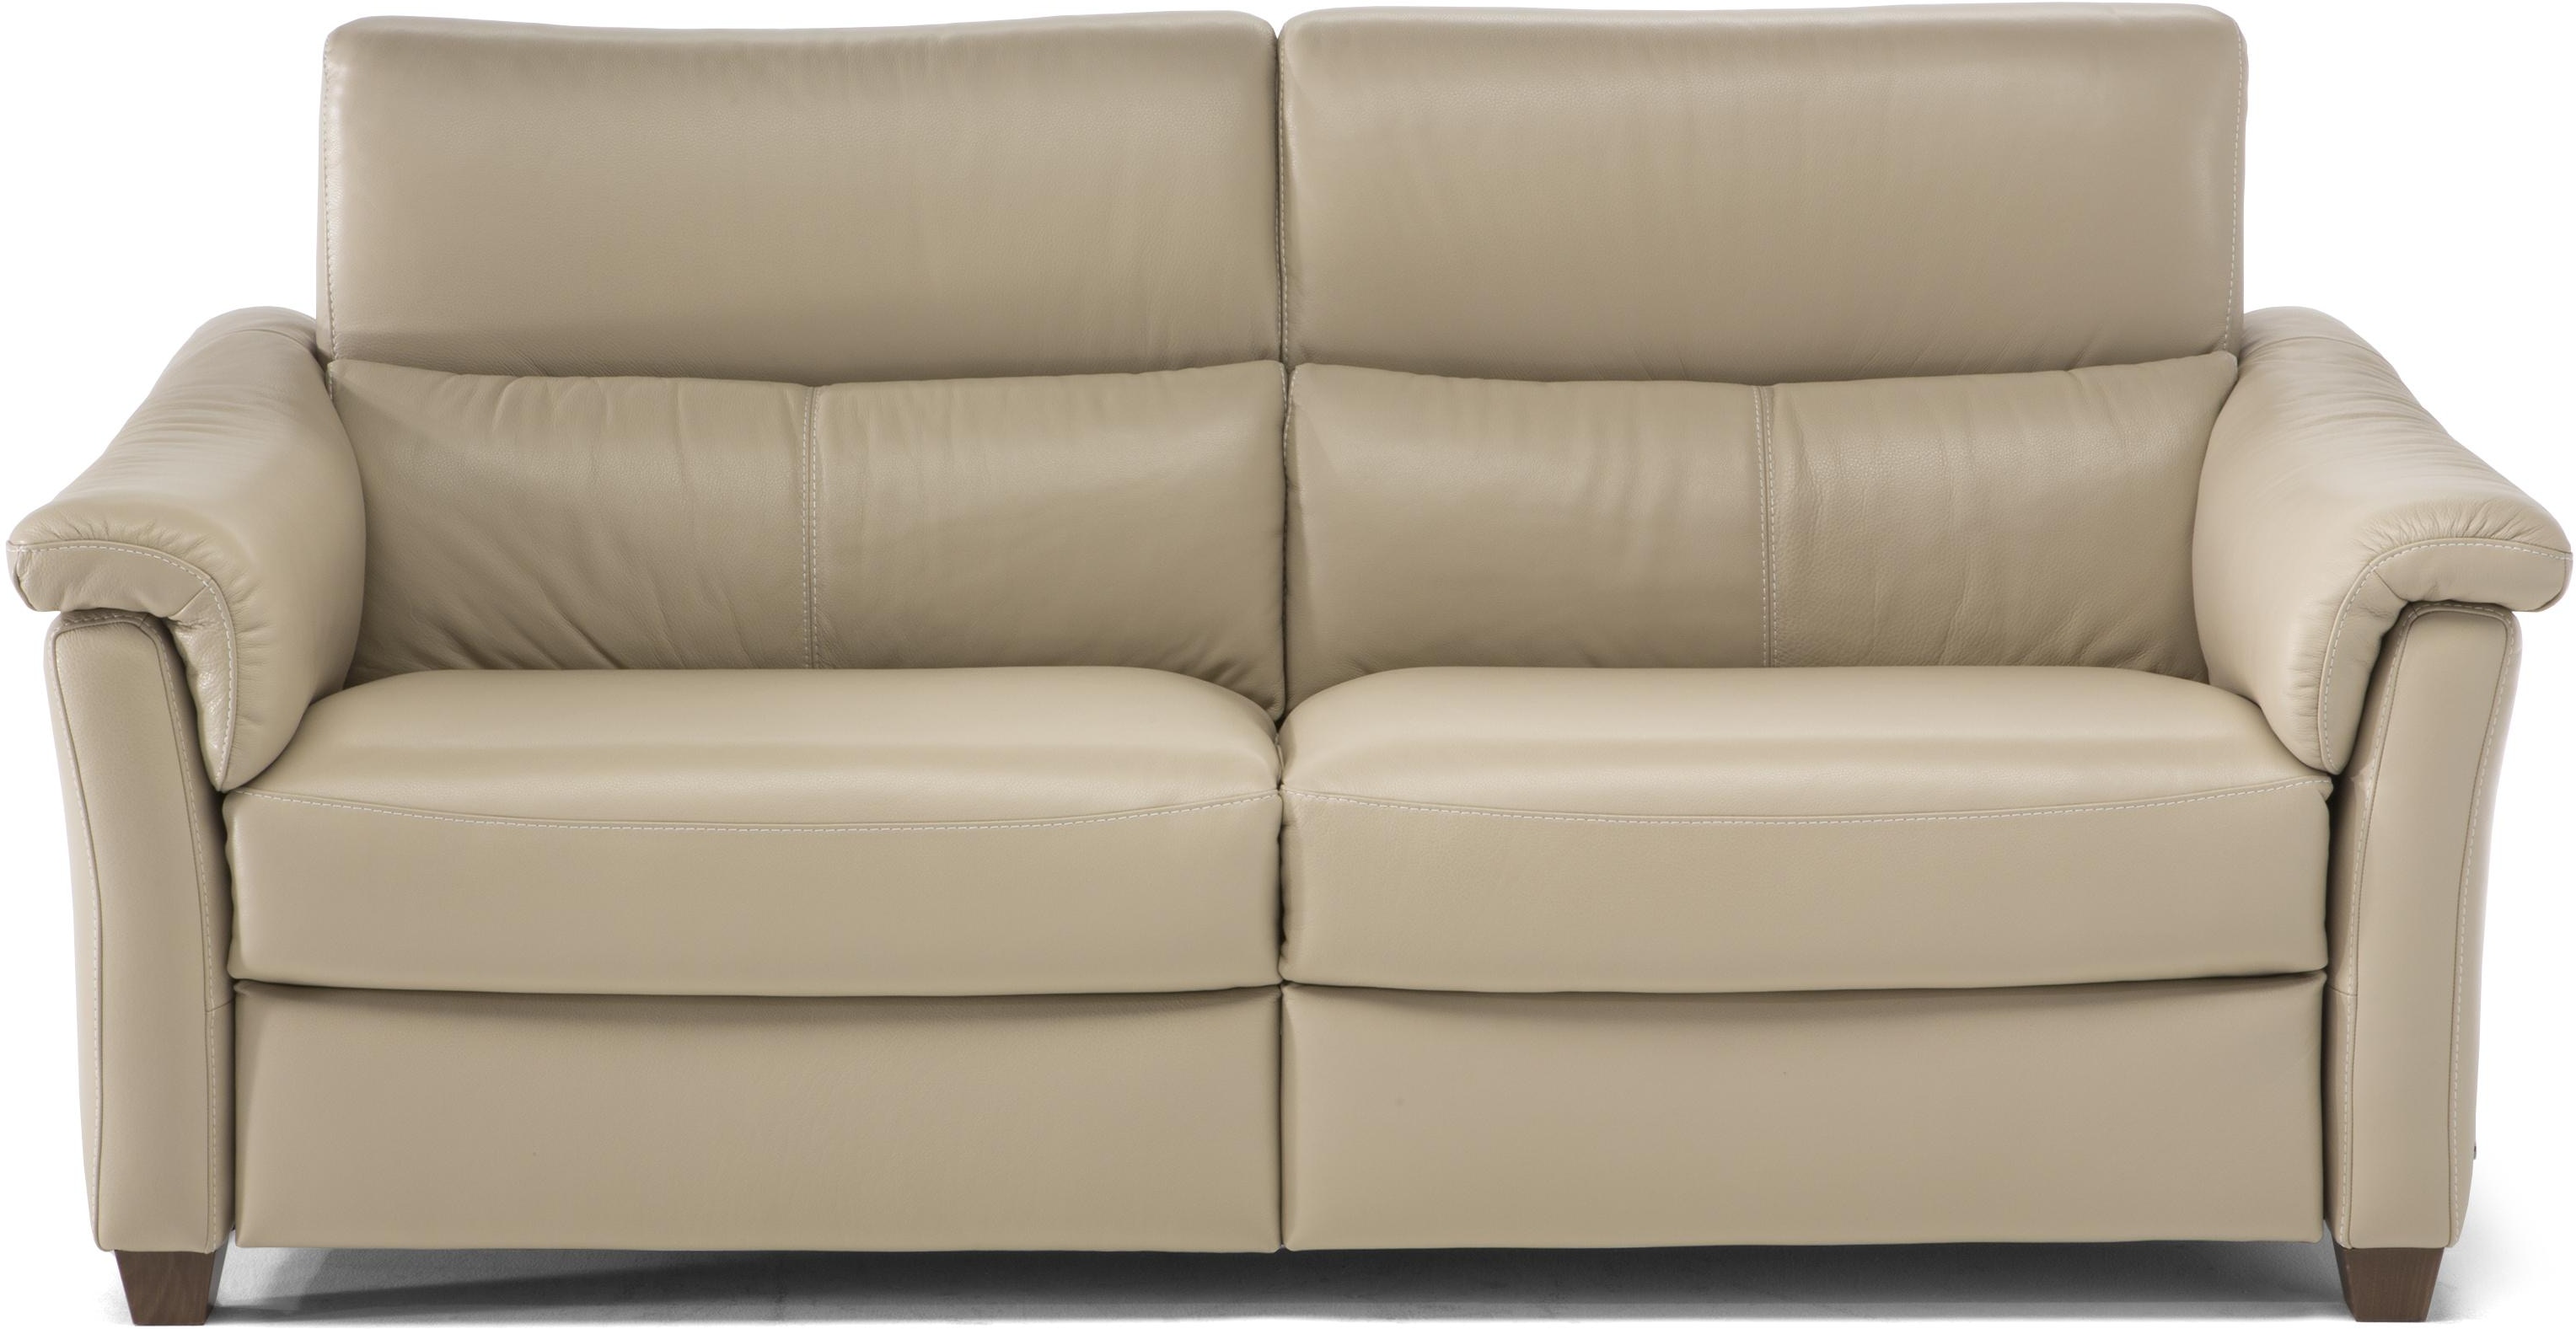 classic italian sofa